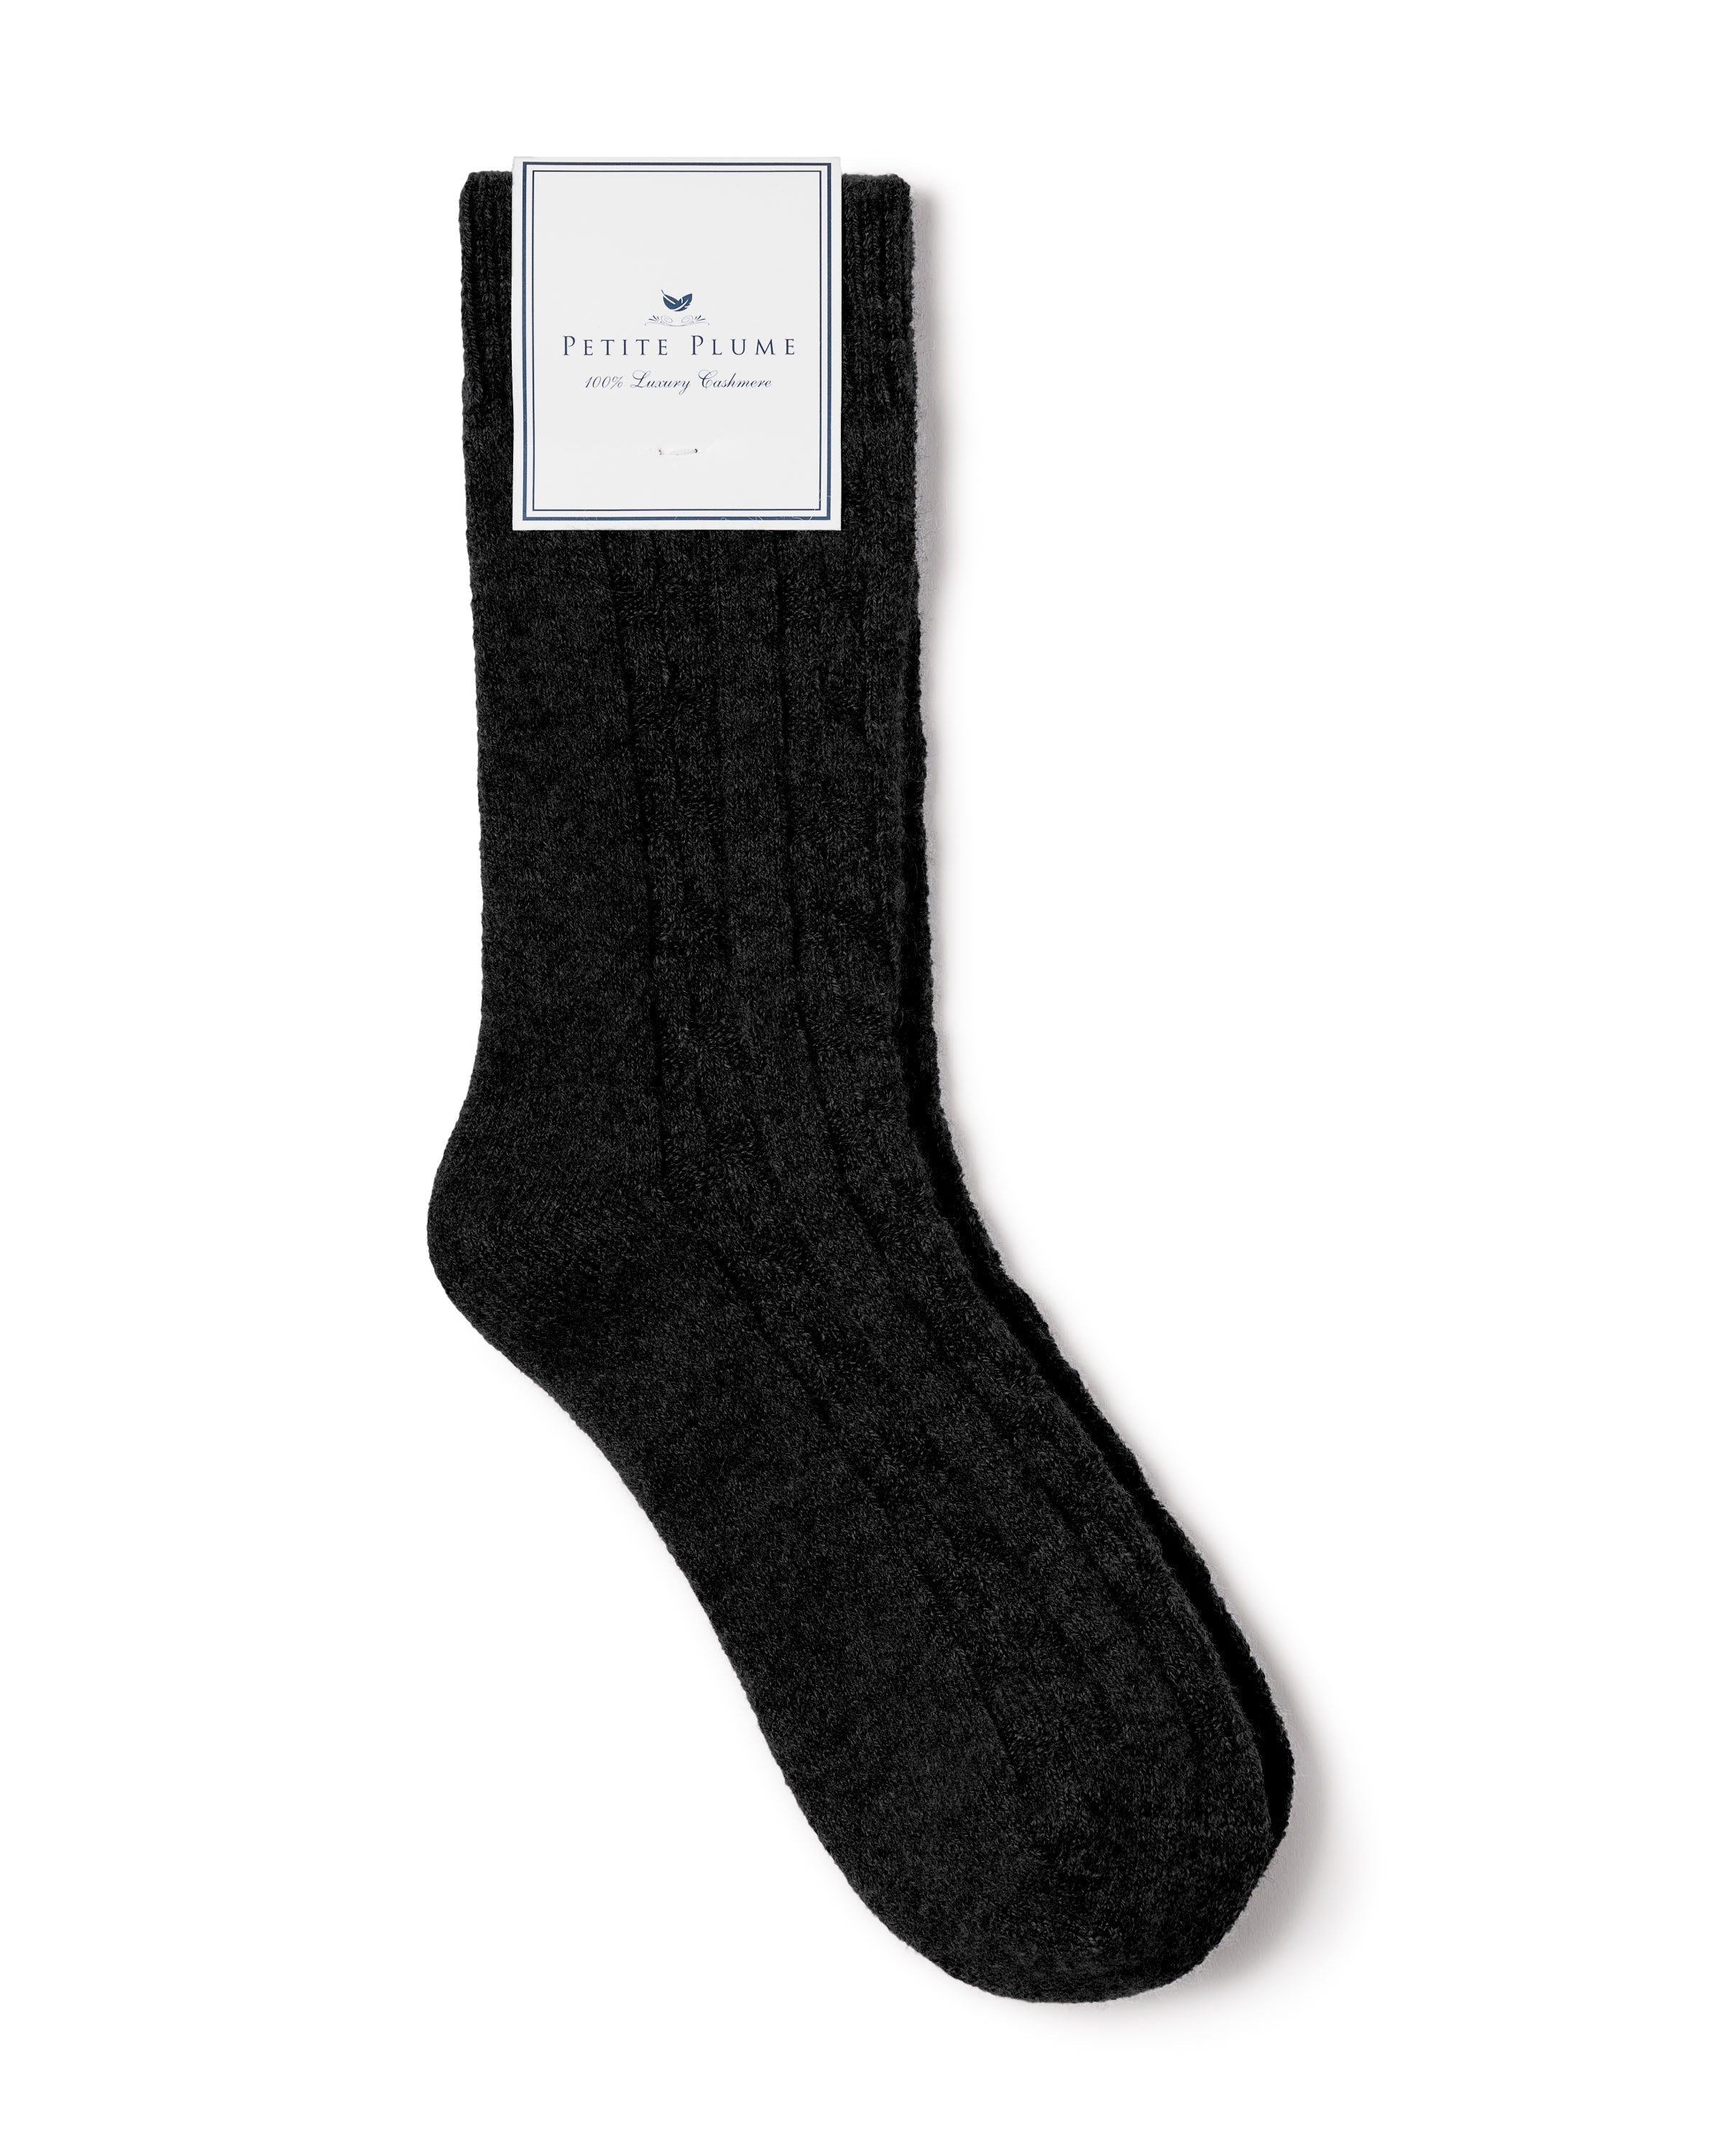 100% Cashmere Women's Socks in Black